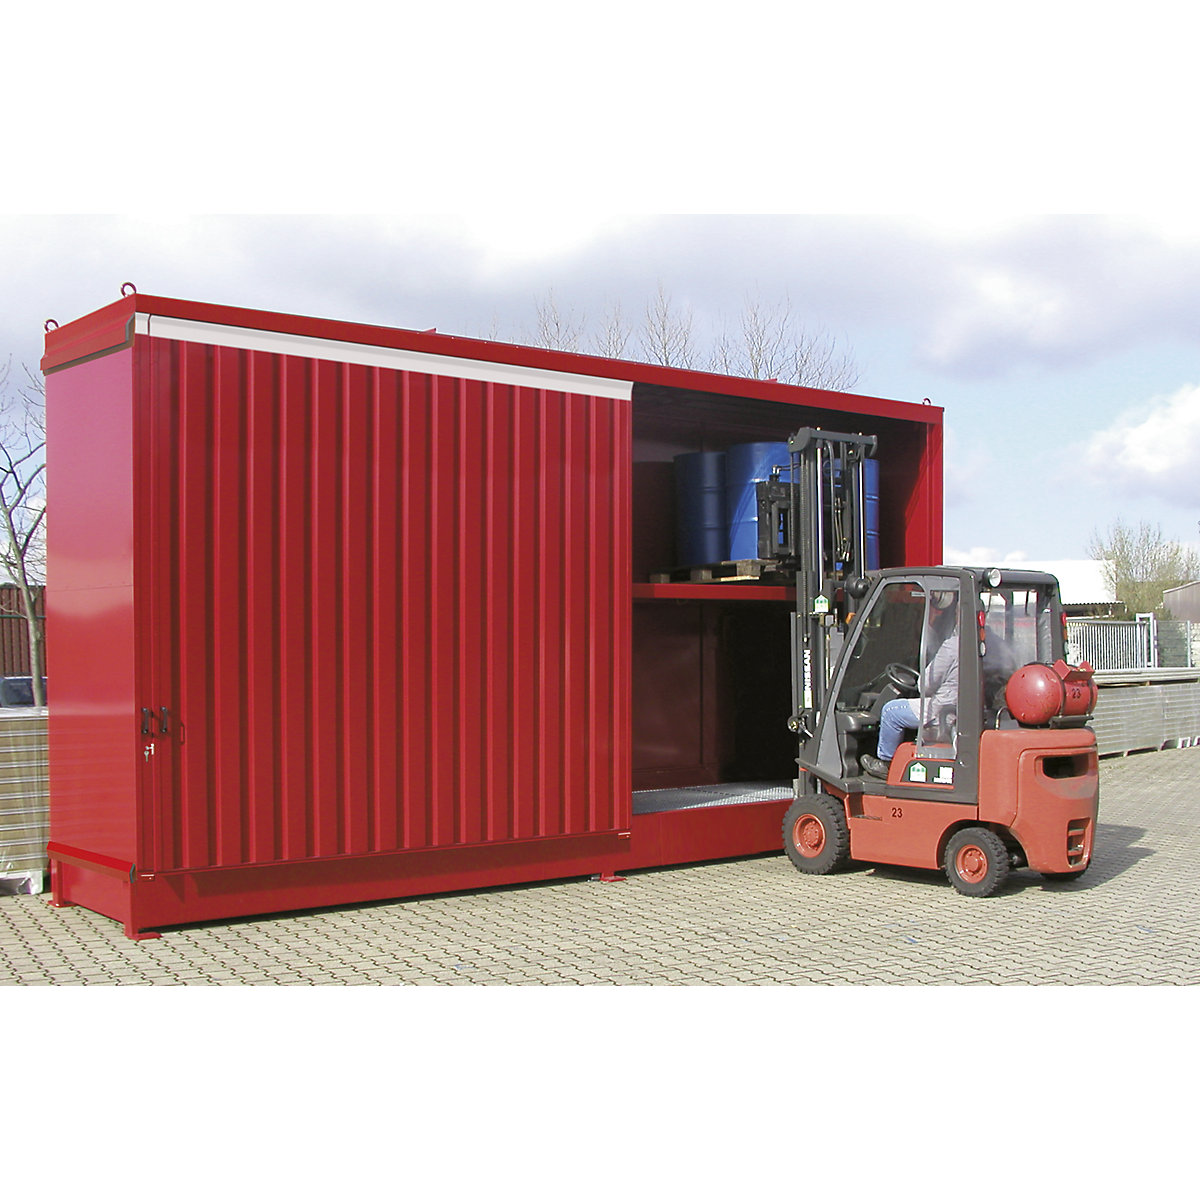 Hazardous goods shelf container – eurokraft pro, capacity 32 x 200 l drums, red-2